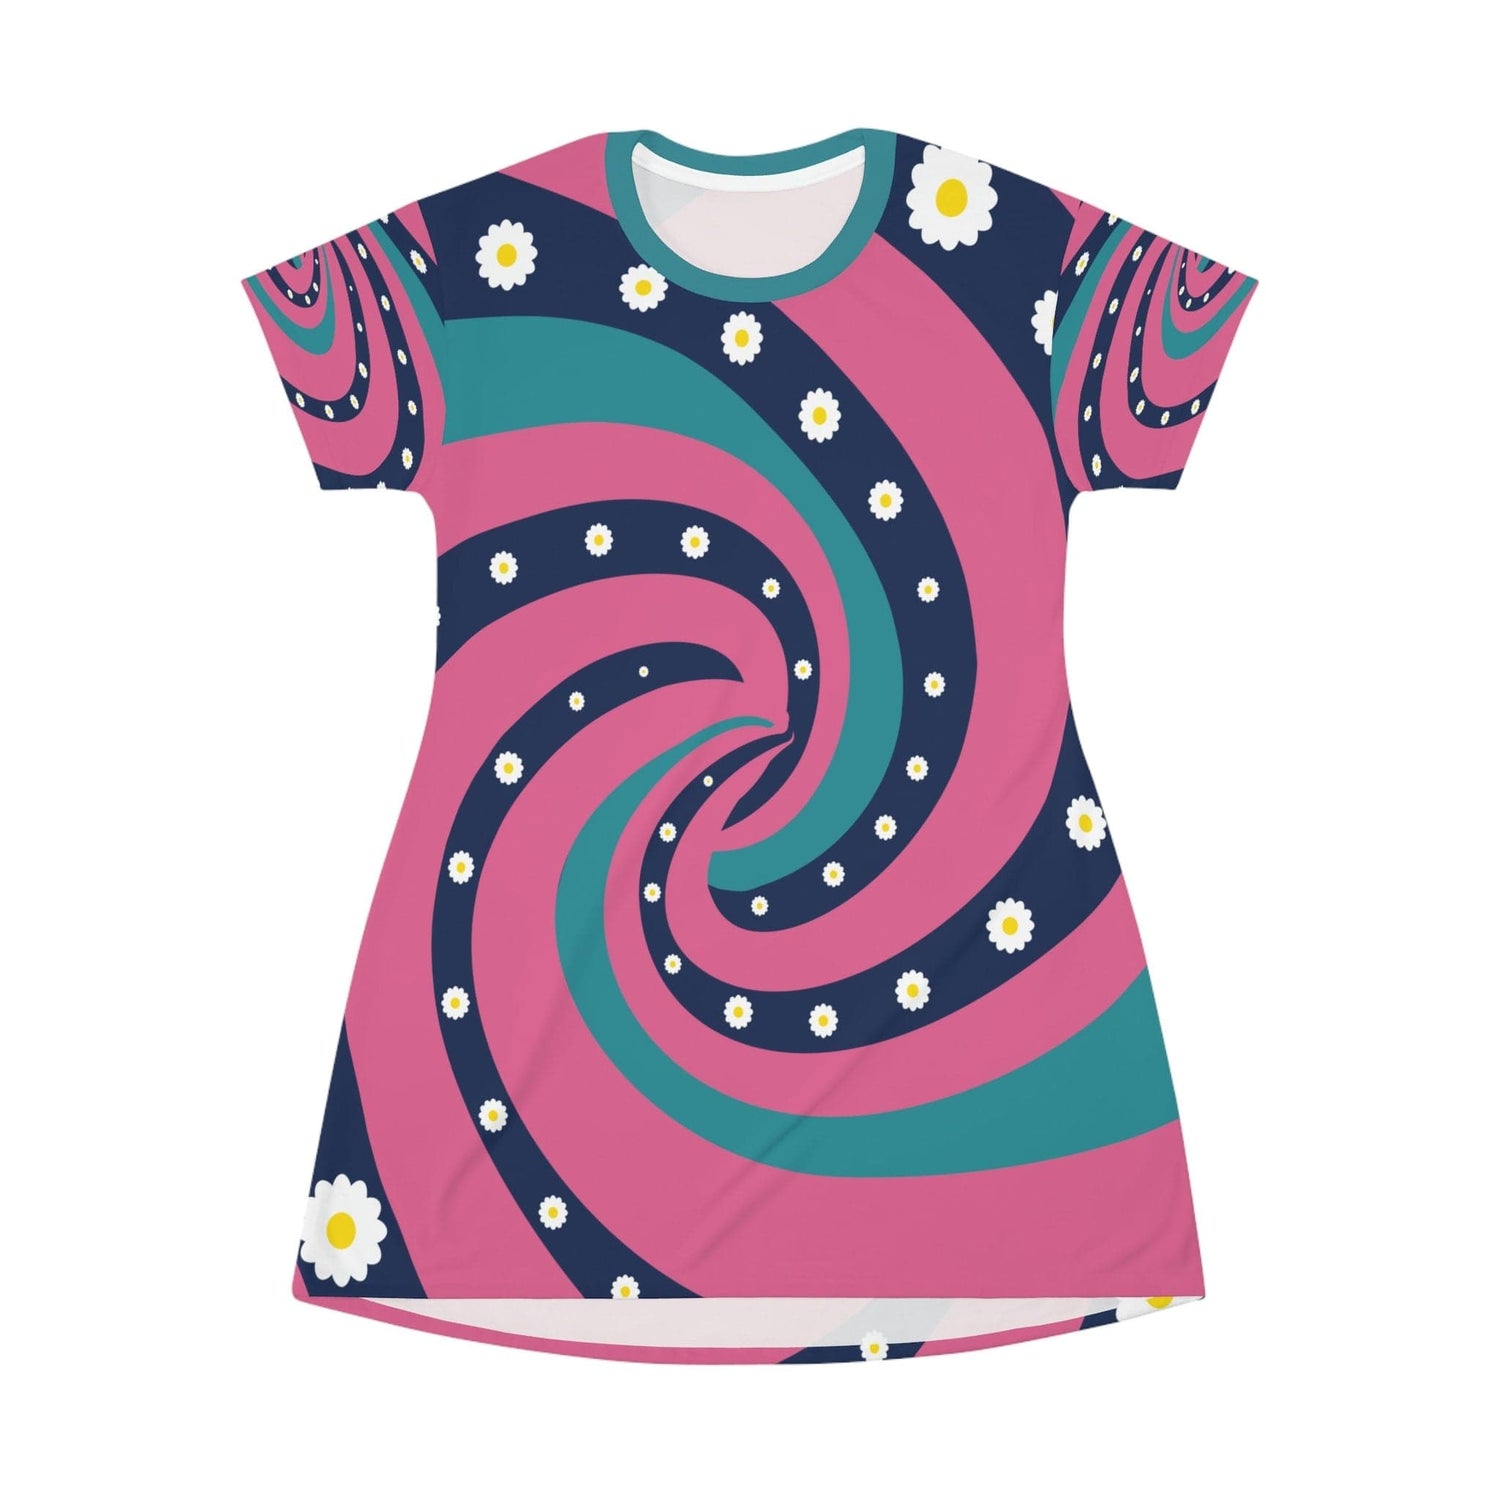 Kate McEnroe New York Retro 70s Psychedelic Groovy Swirl Flower Power Tshirt Dress in Mid Century Modern Teal Blue, Pink, Navy, MCM Summer Party Dress, Beach Wear Dresses L 10322600403798641003